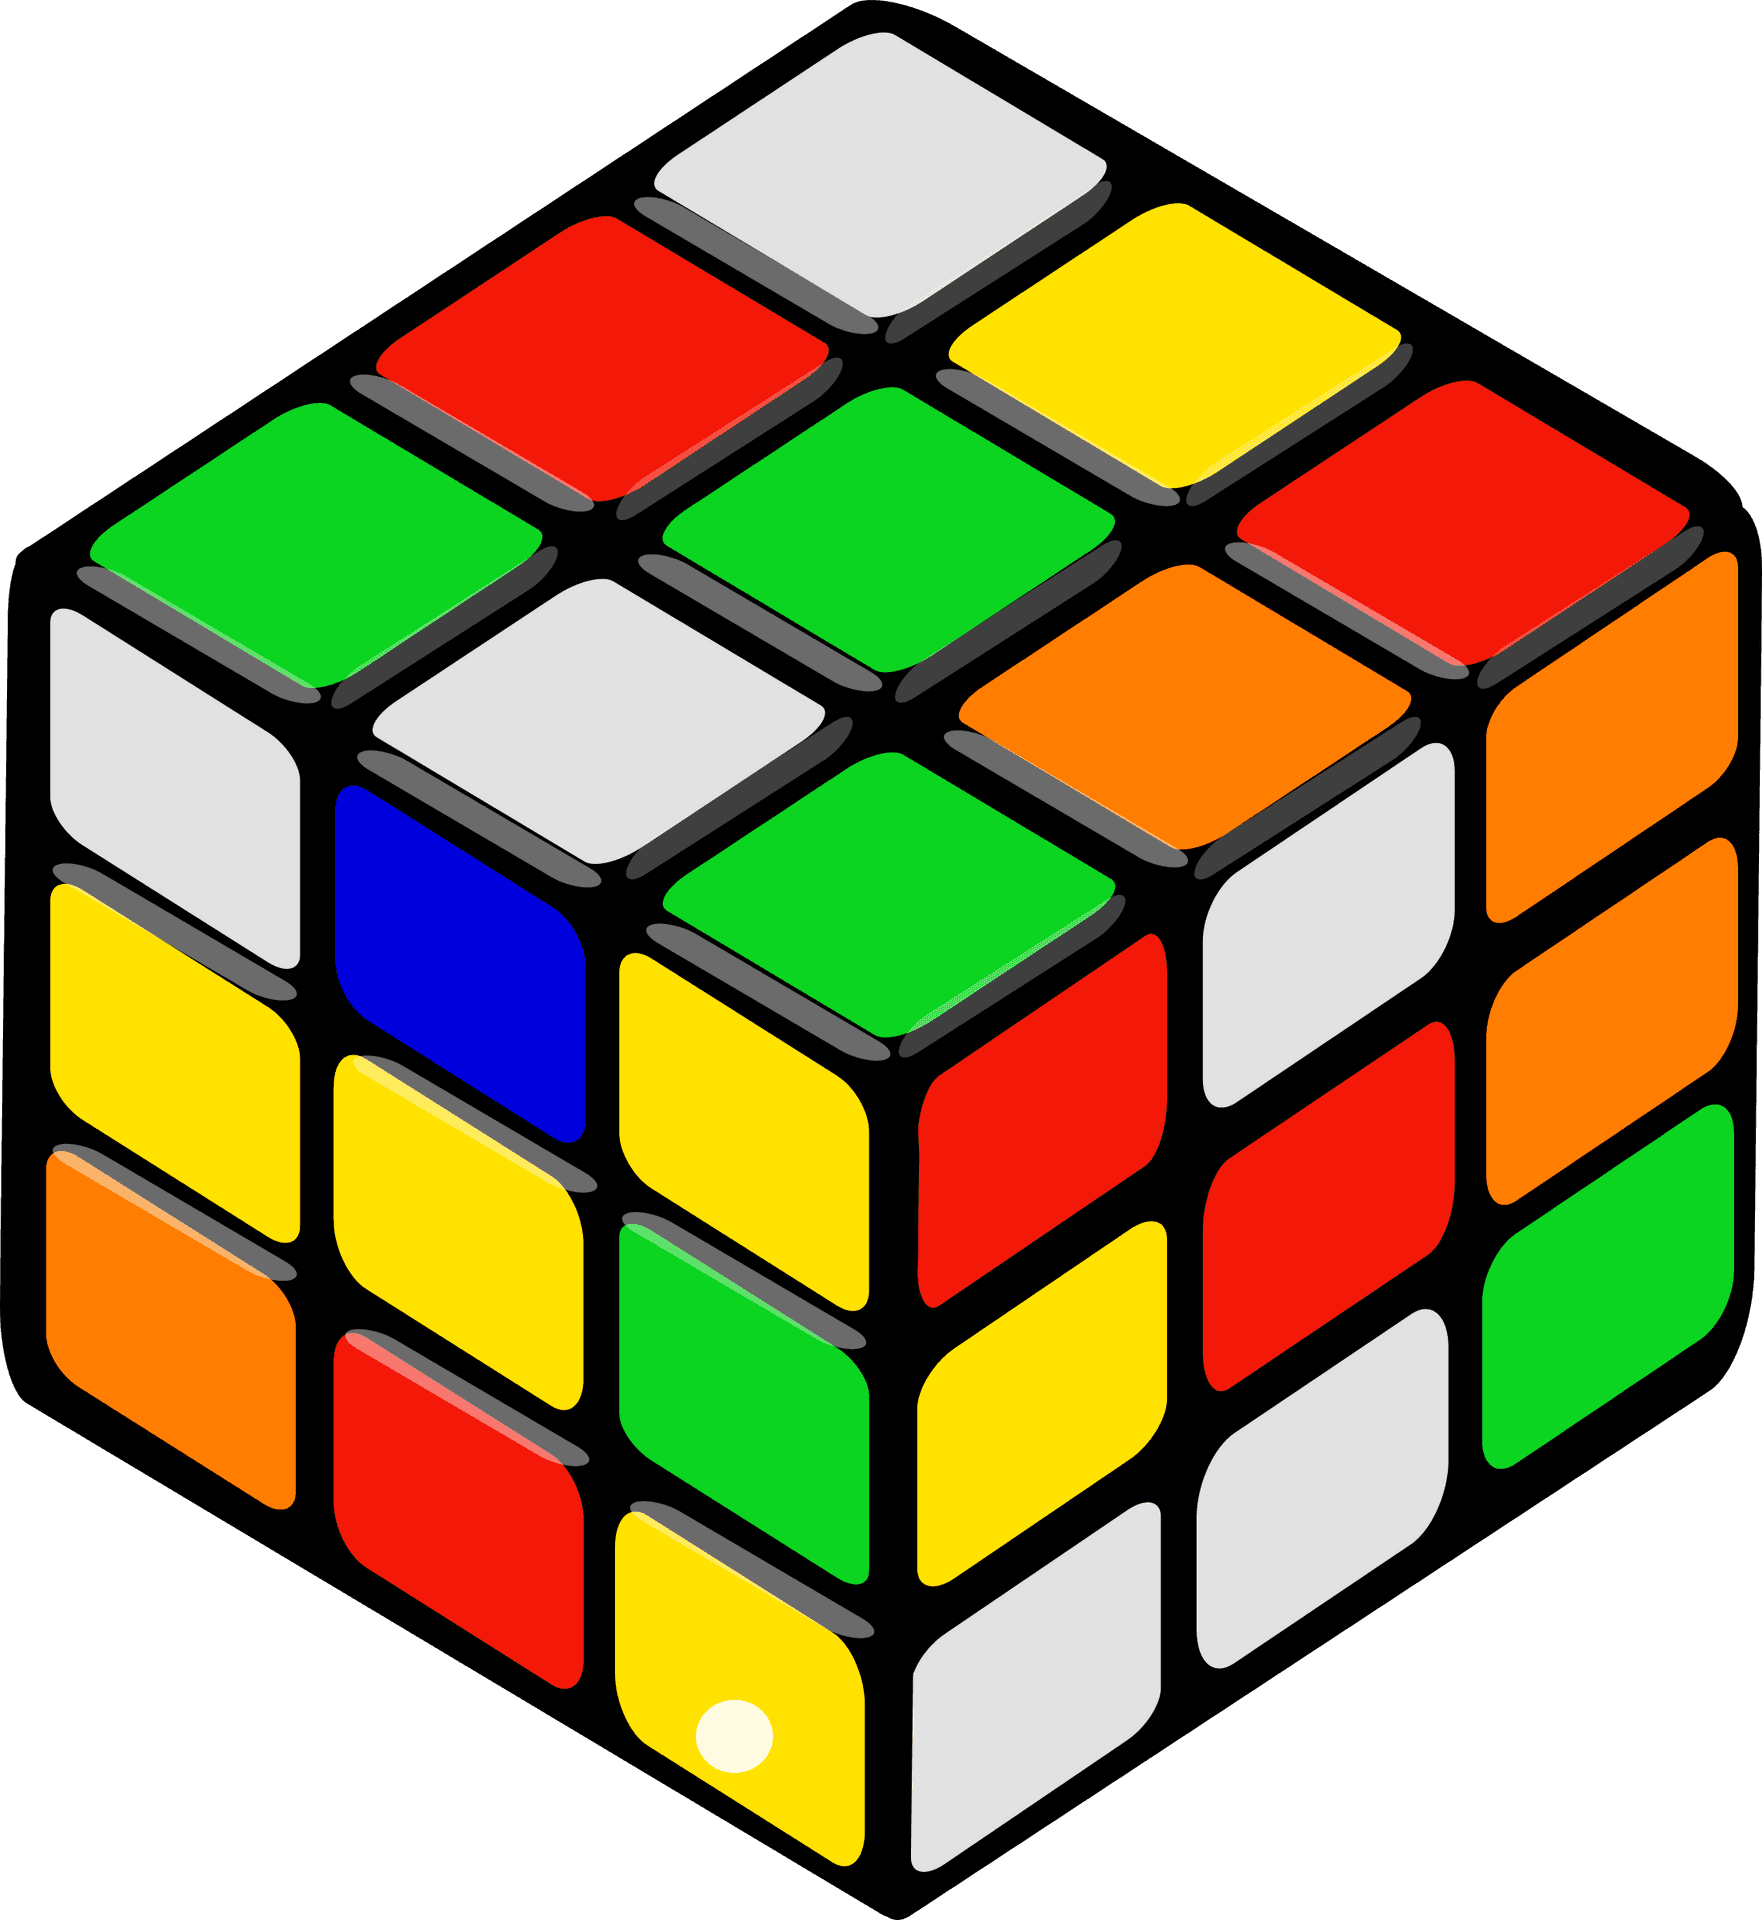 Unsolved Rubiks Cube Illustration.png PNG image